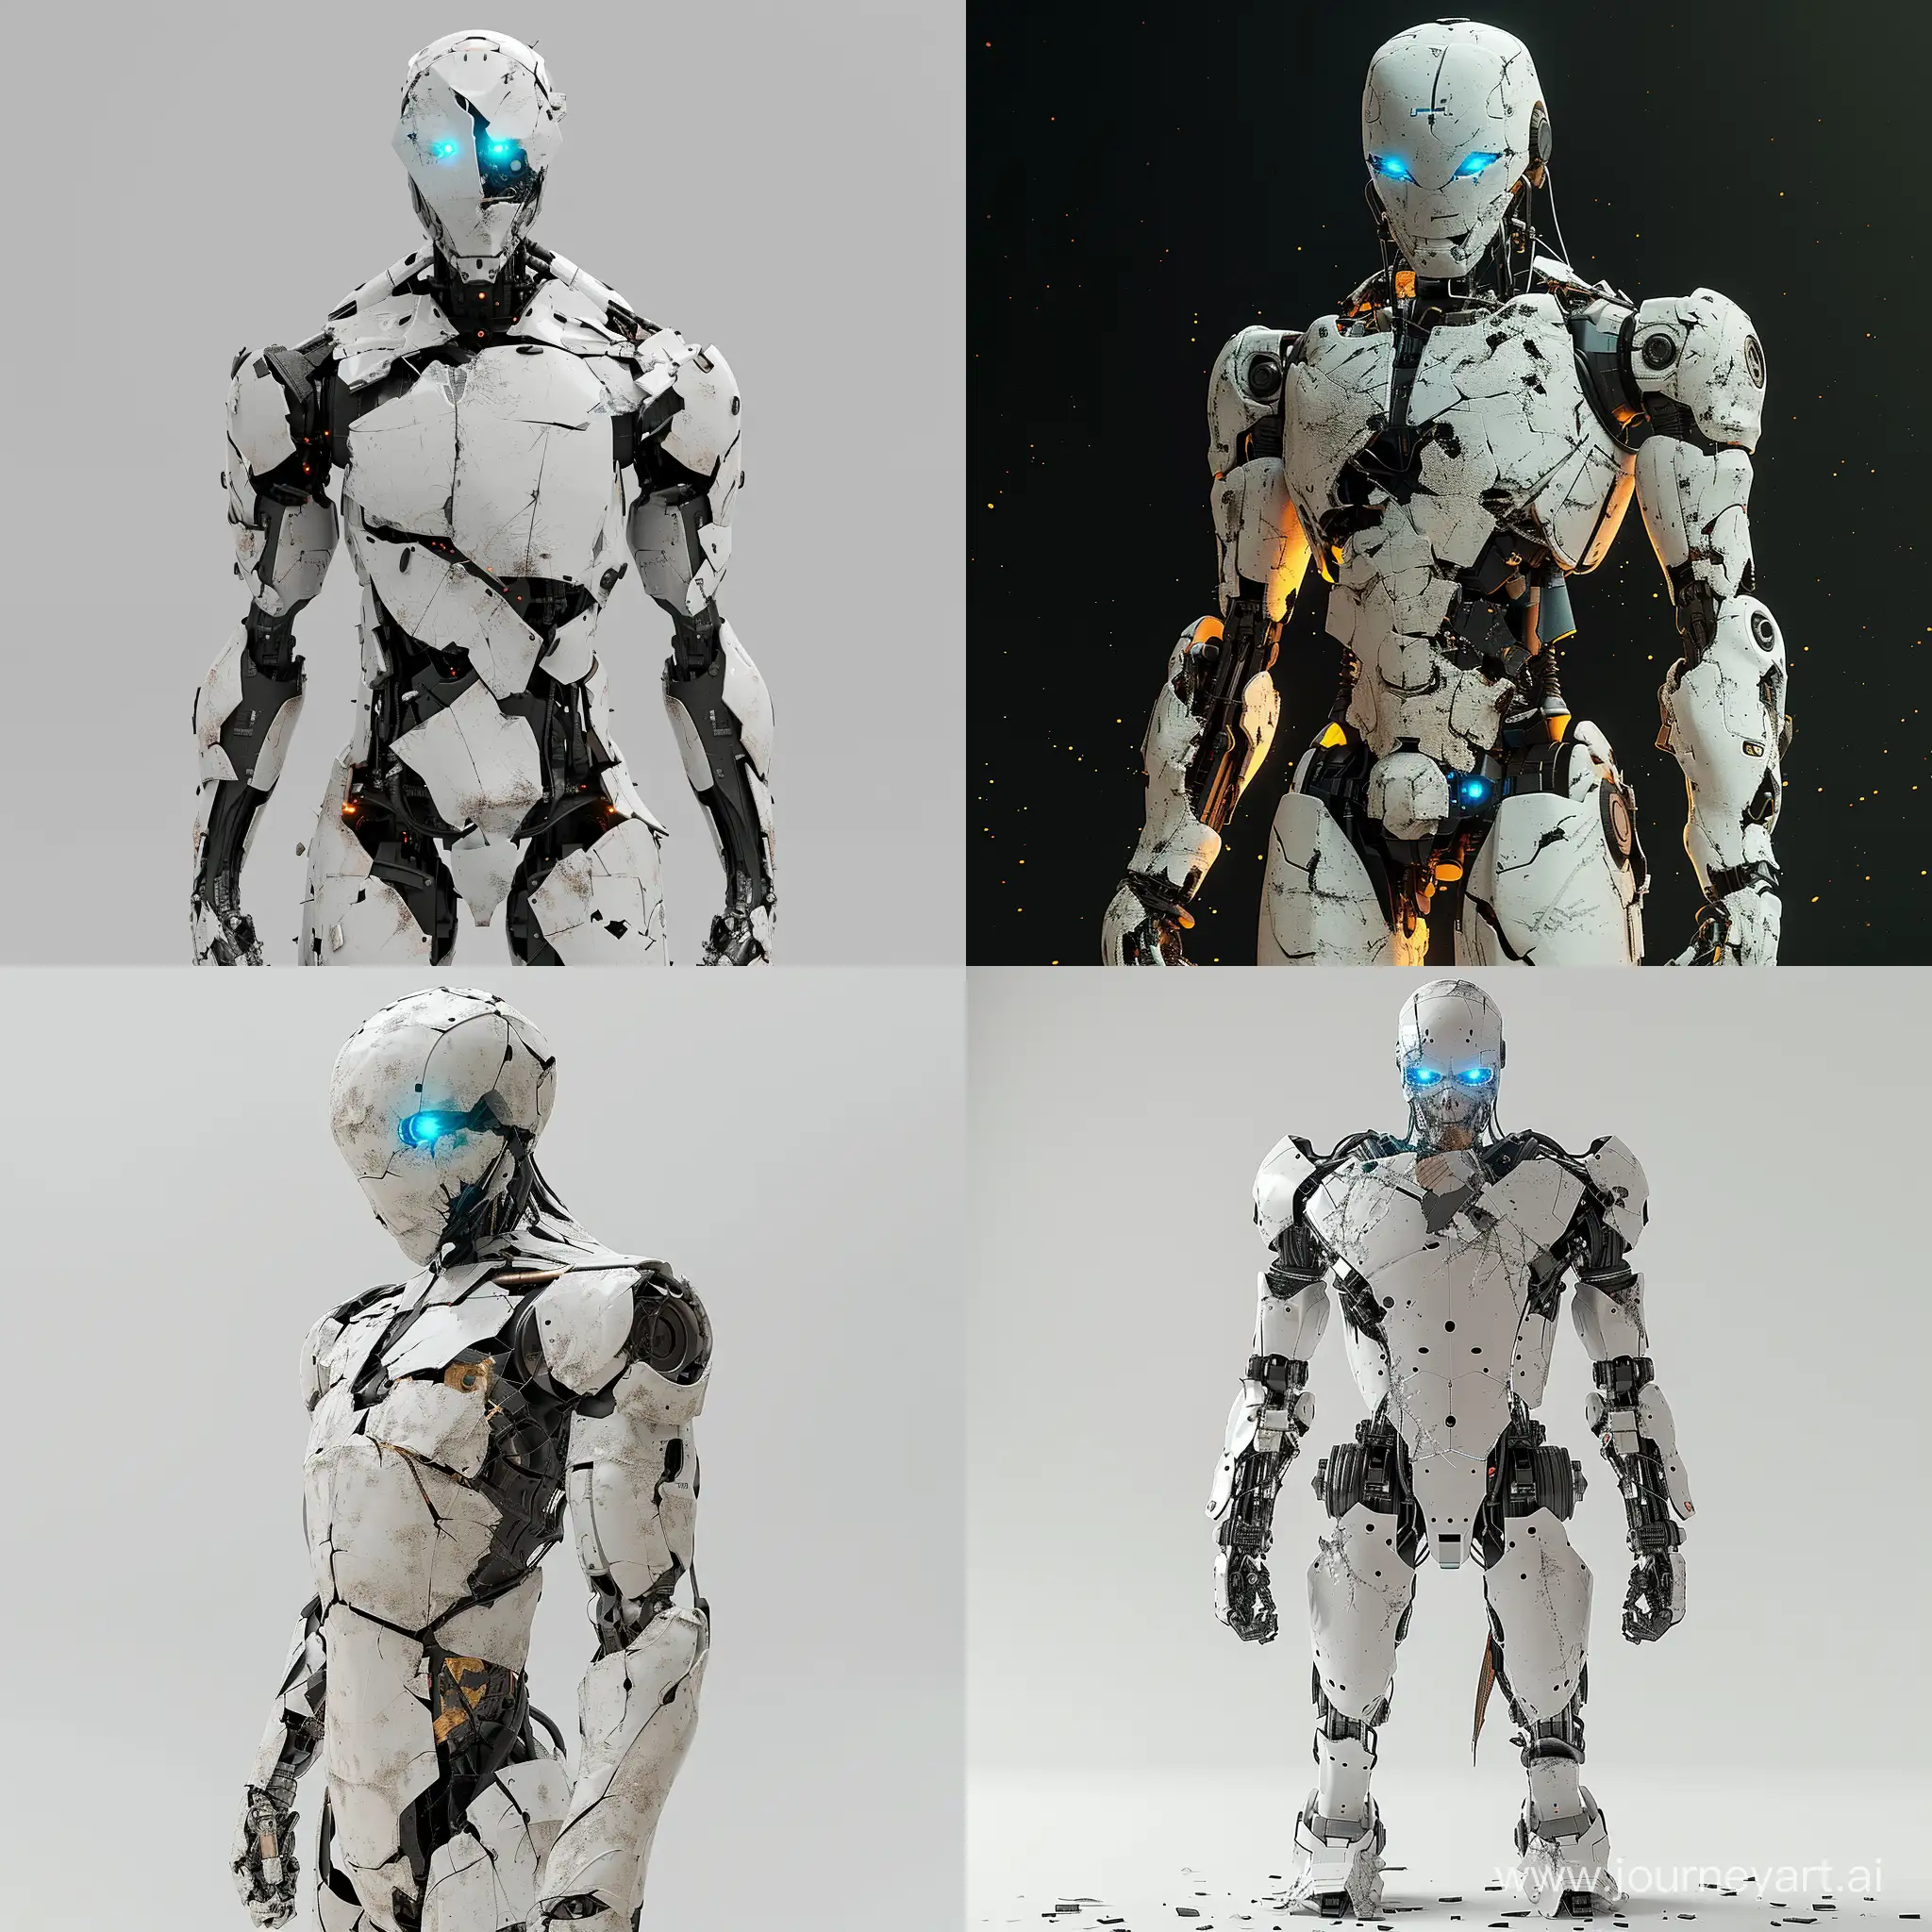 Glowing-BlueEyed-Broken-Robot-in-Unusual-Pose-8K-VRay-Realism